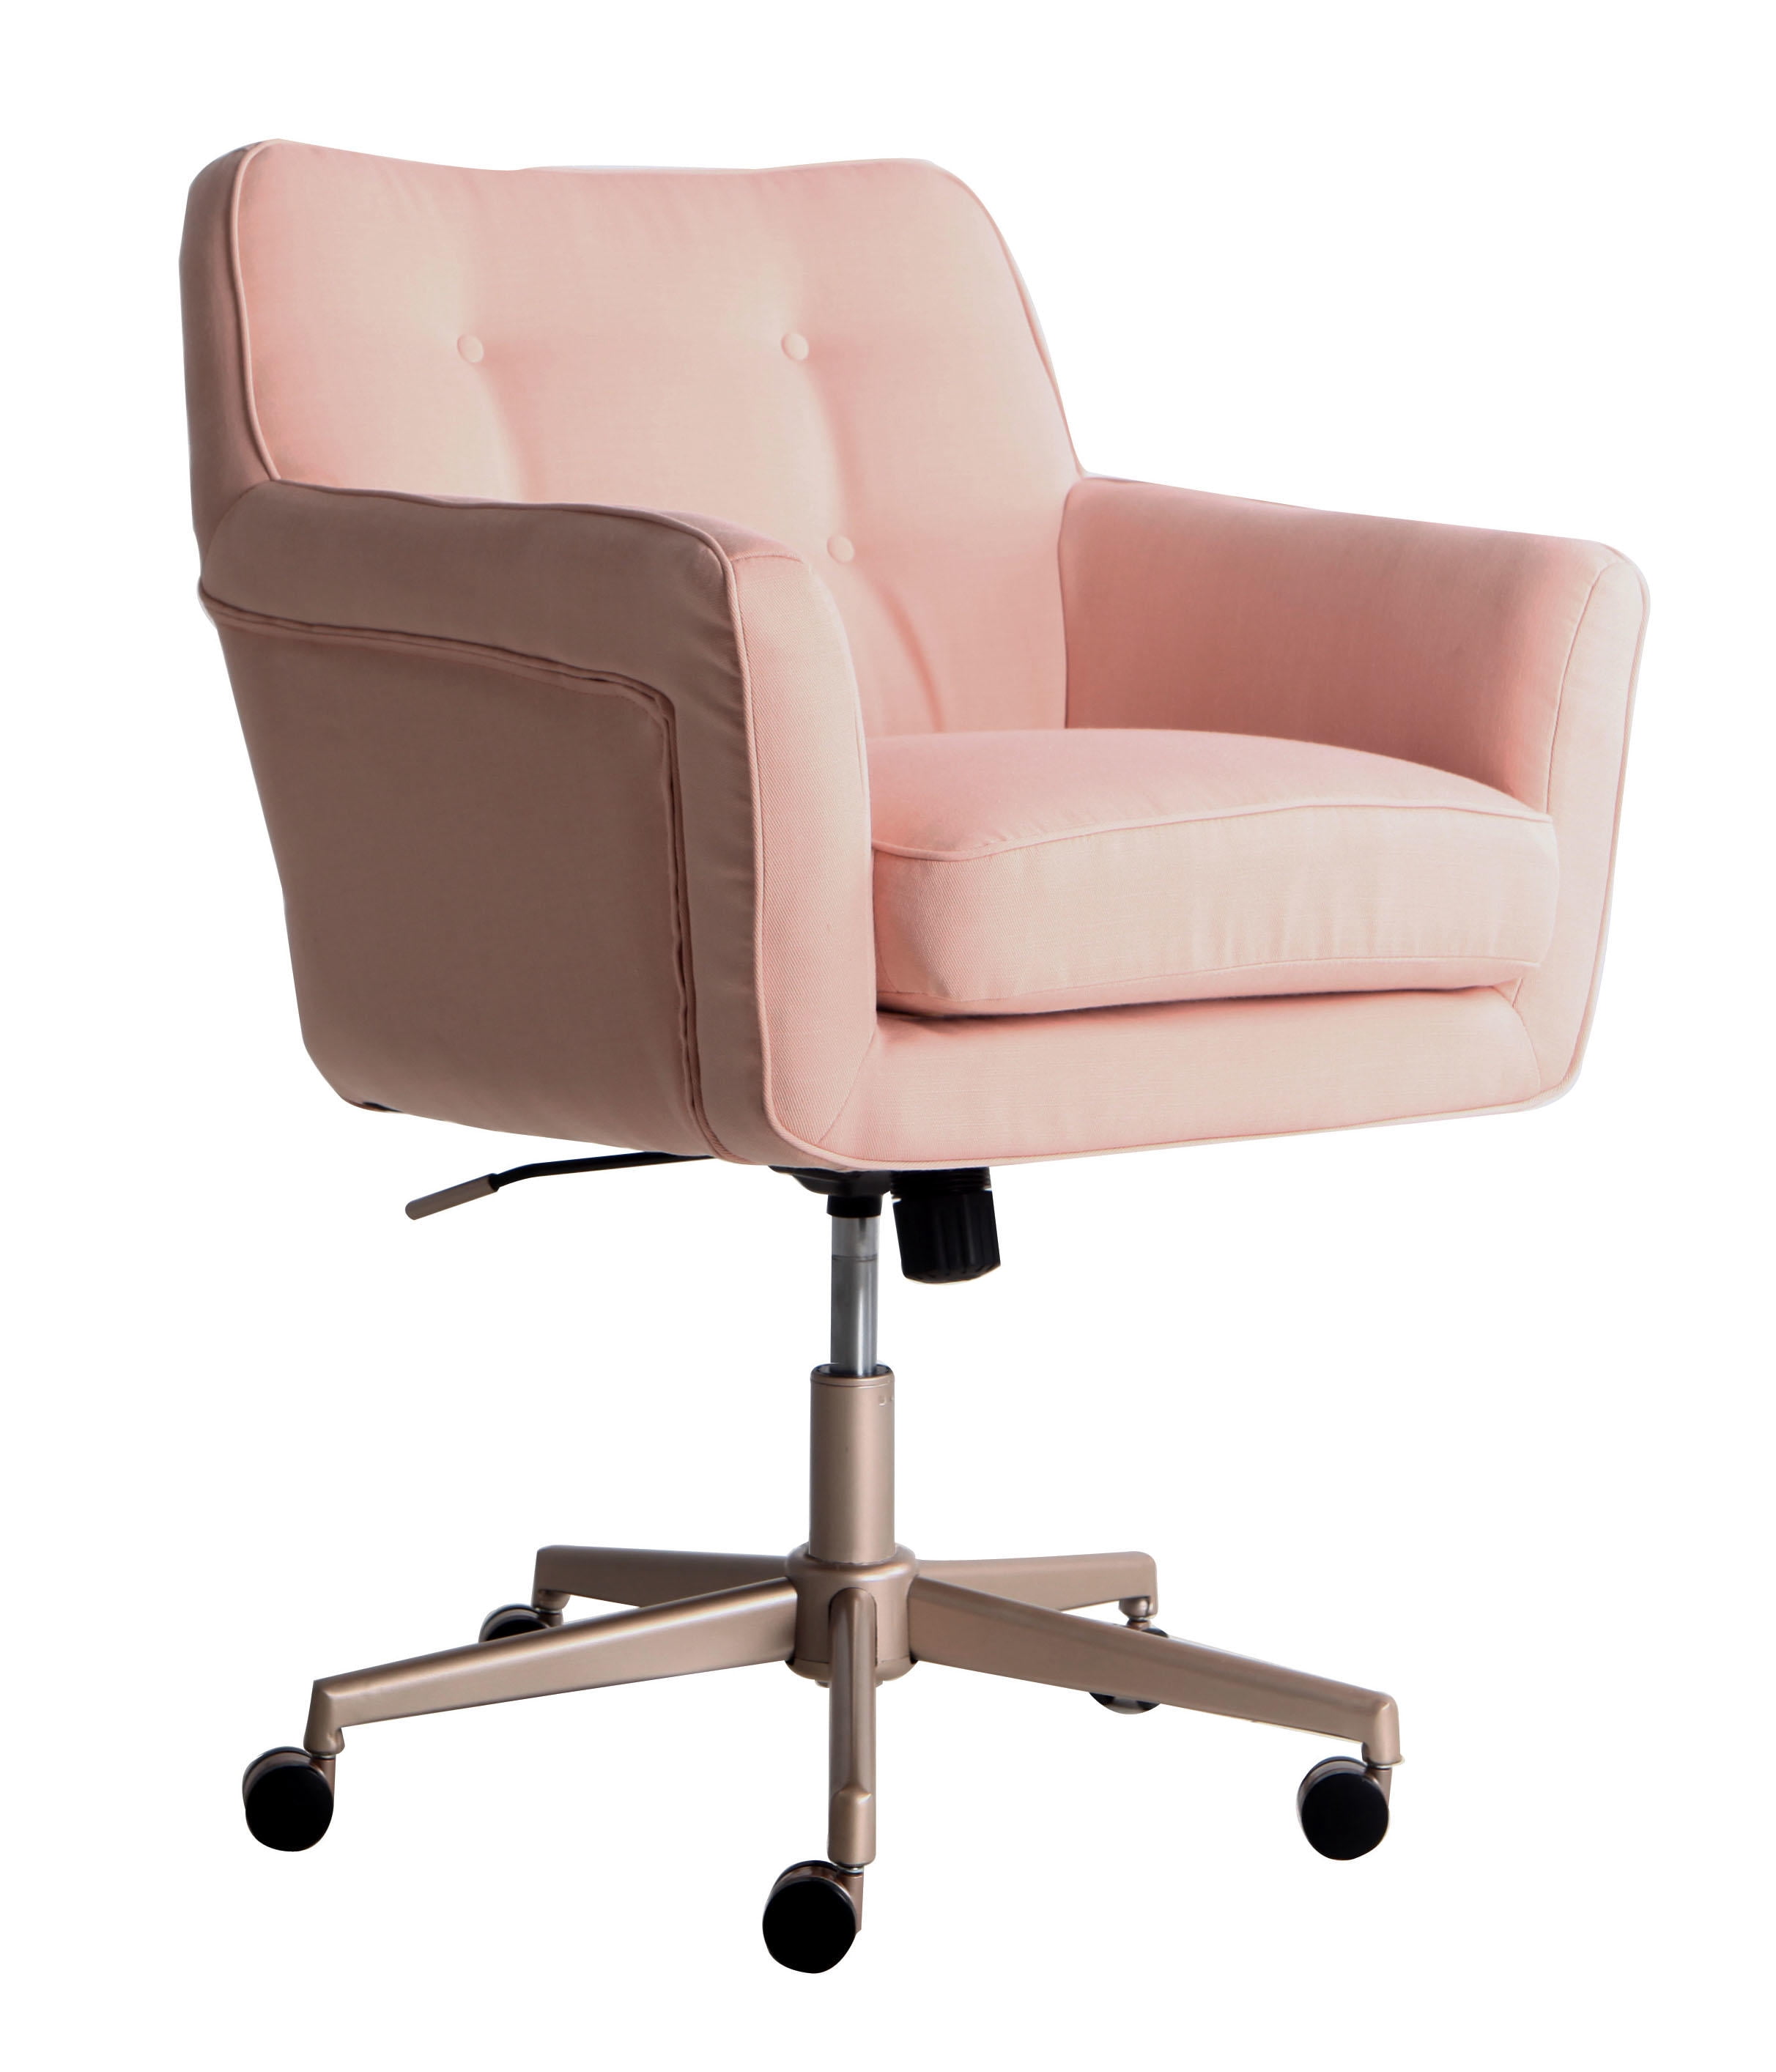 Serta Style Ashland Home Office Chair Blush Pink Twill Fabric Walmart Com Walmart Com